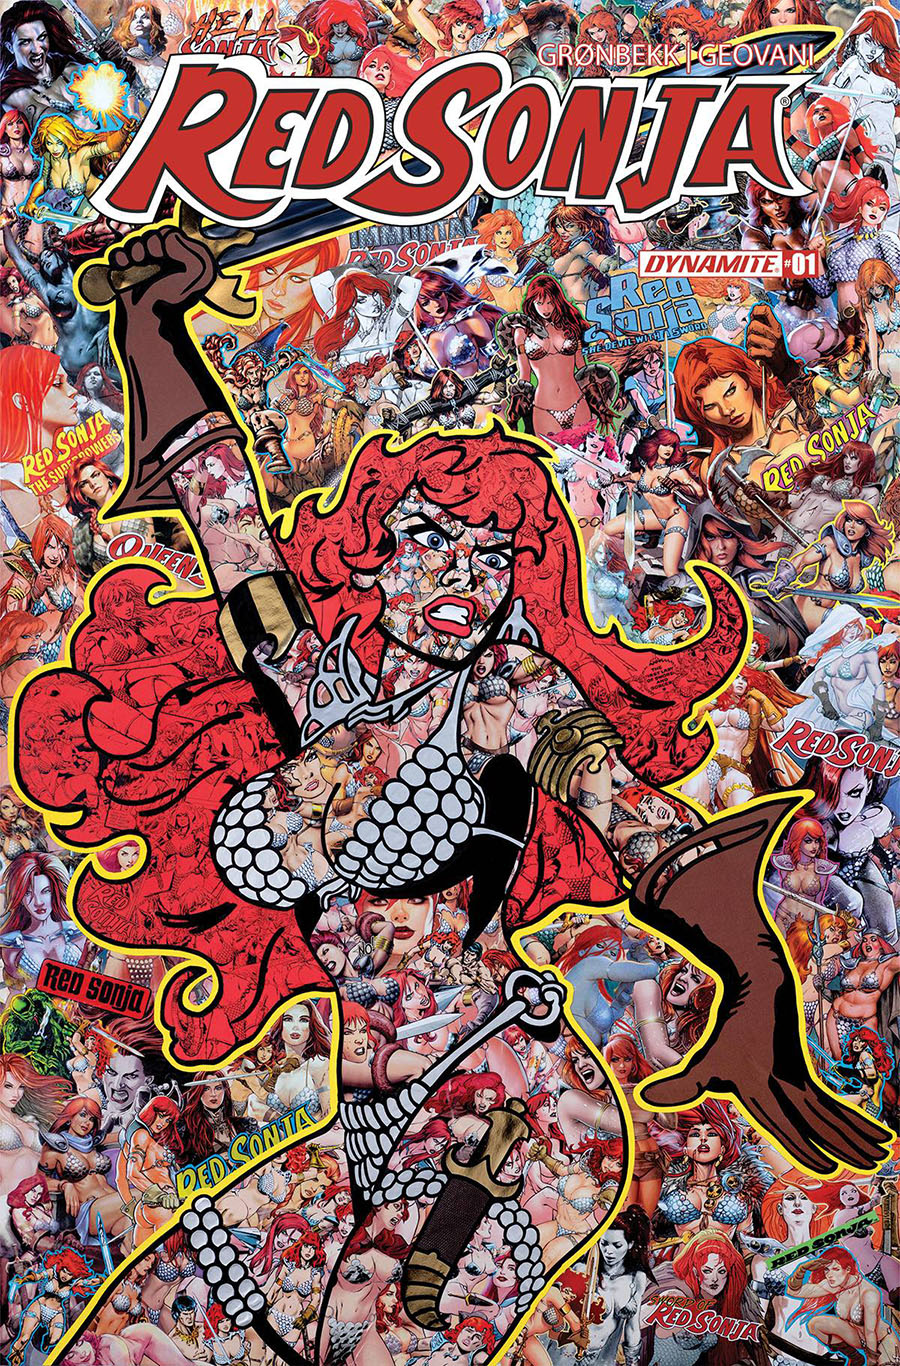 Red Sonja Vol 10 #1 Cover F Variant Mr Garcin Collage Cover